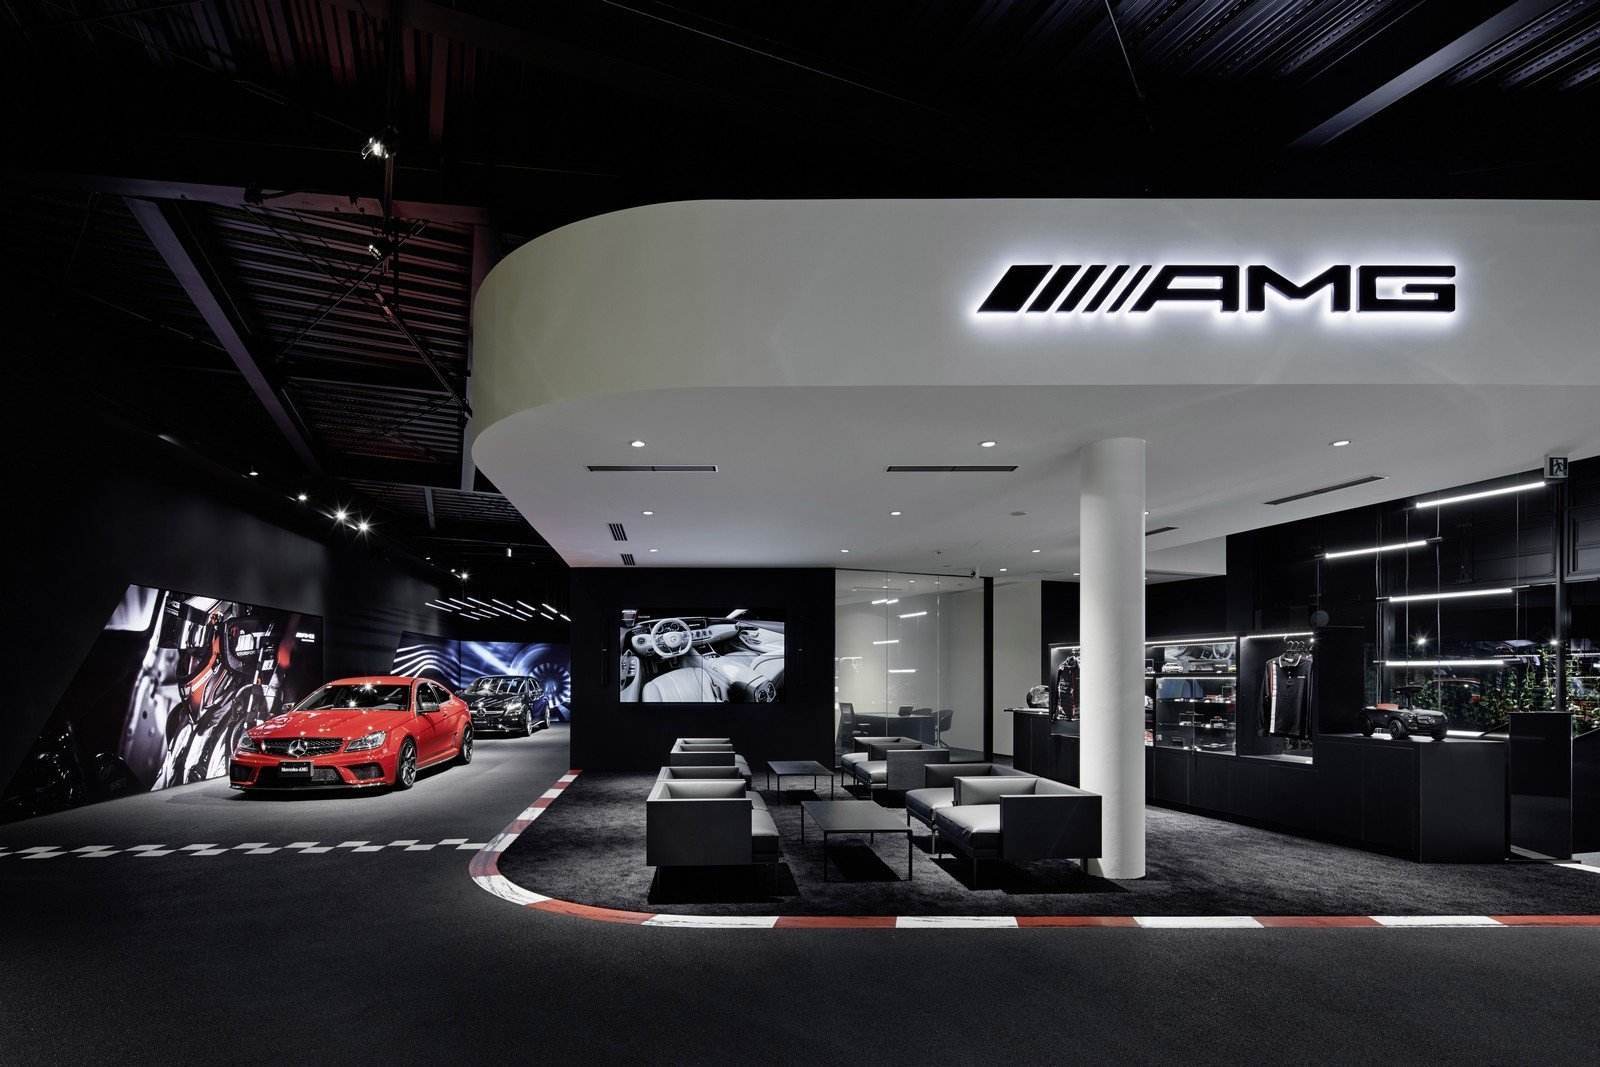 Mercedes-AMG Showroom - Tokio Mercedes-AMG showroom in Tokyo Setagaya;